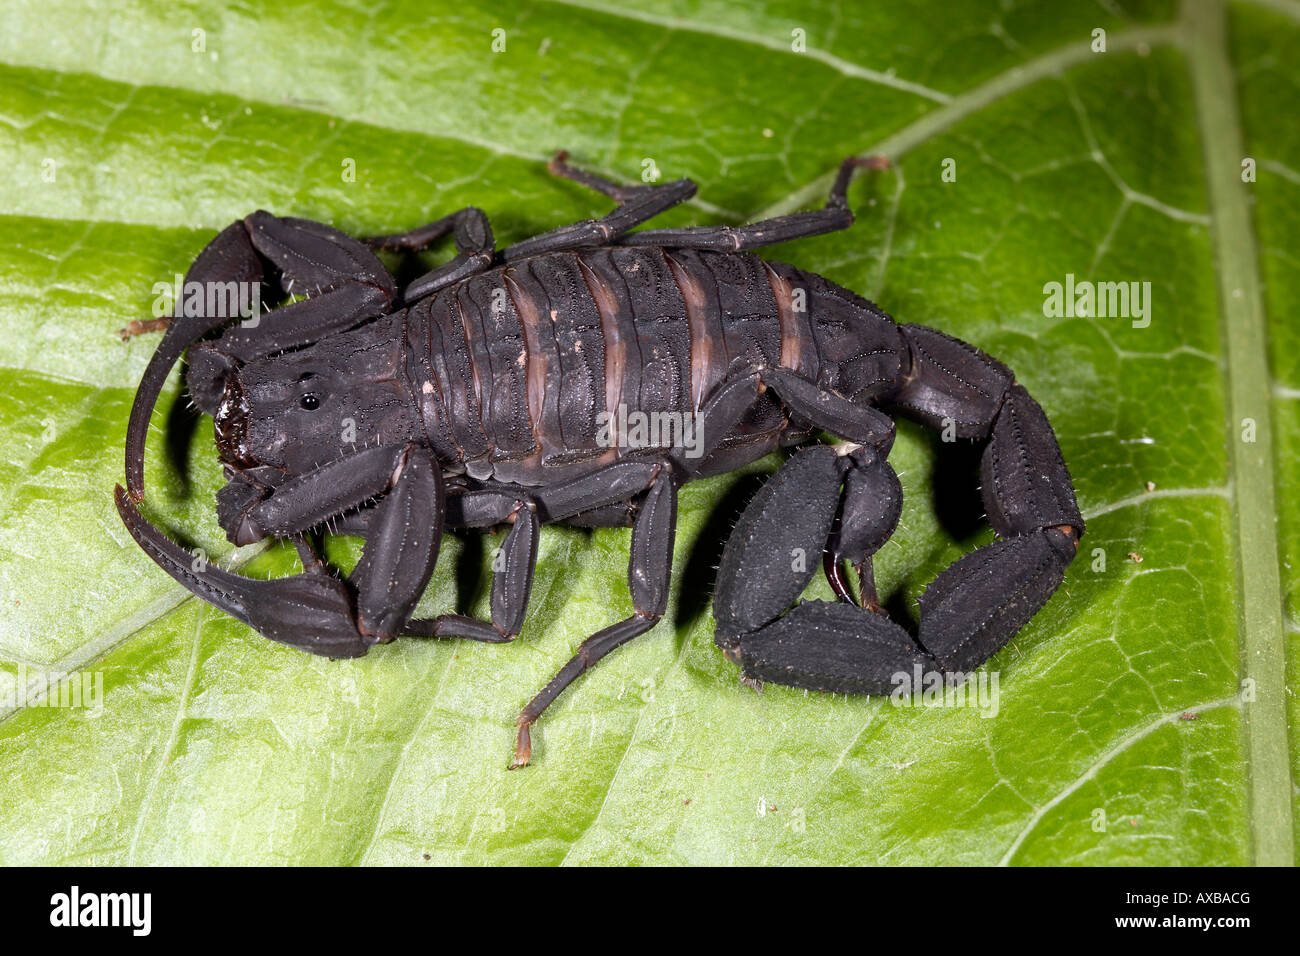 Amazonian scorpion on a leaf Stock Photo